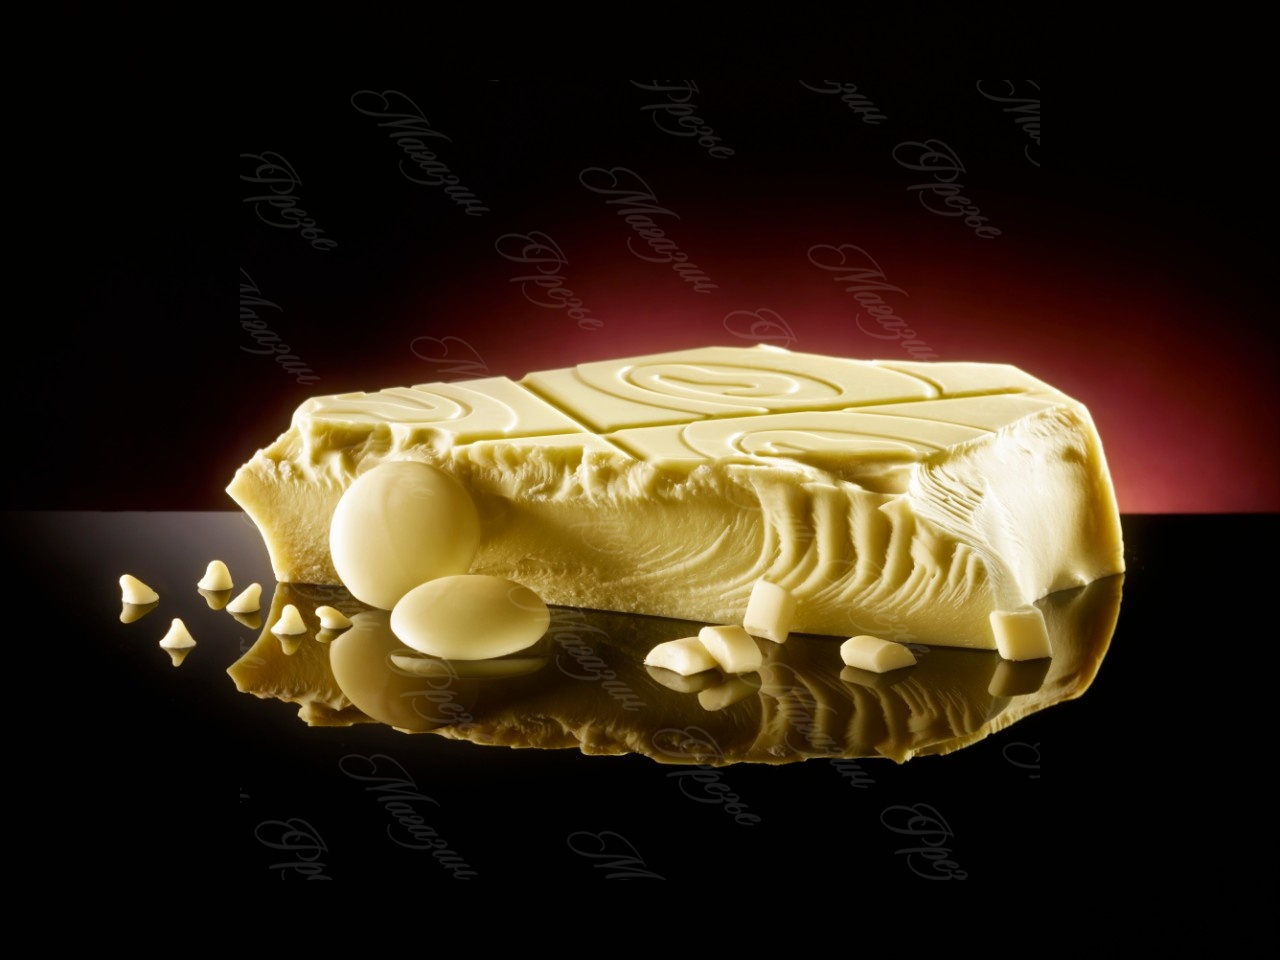 Белколад белый Belcolade Бланш Селексьон 31% какао от кондитерского магазина Фрезье https://fraisier.ru